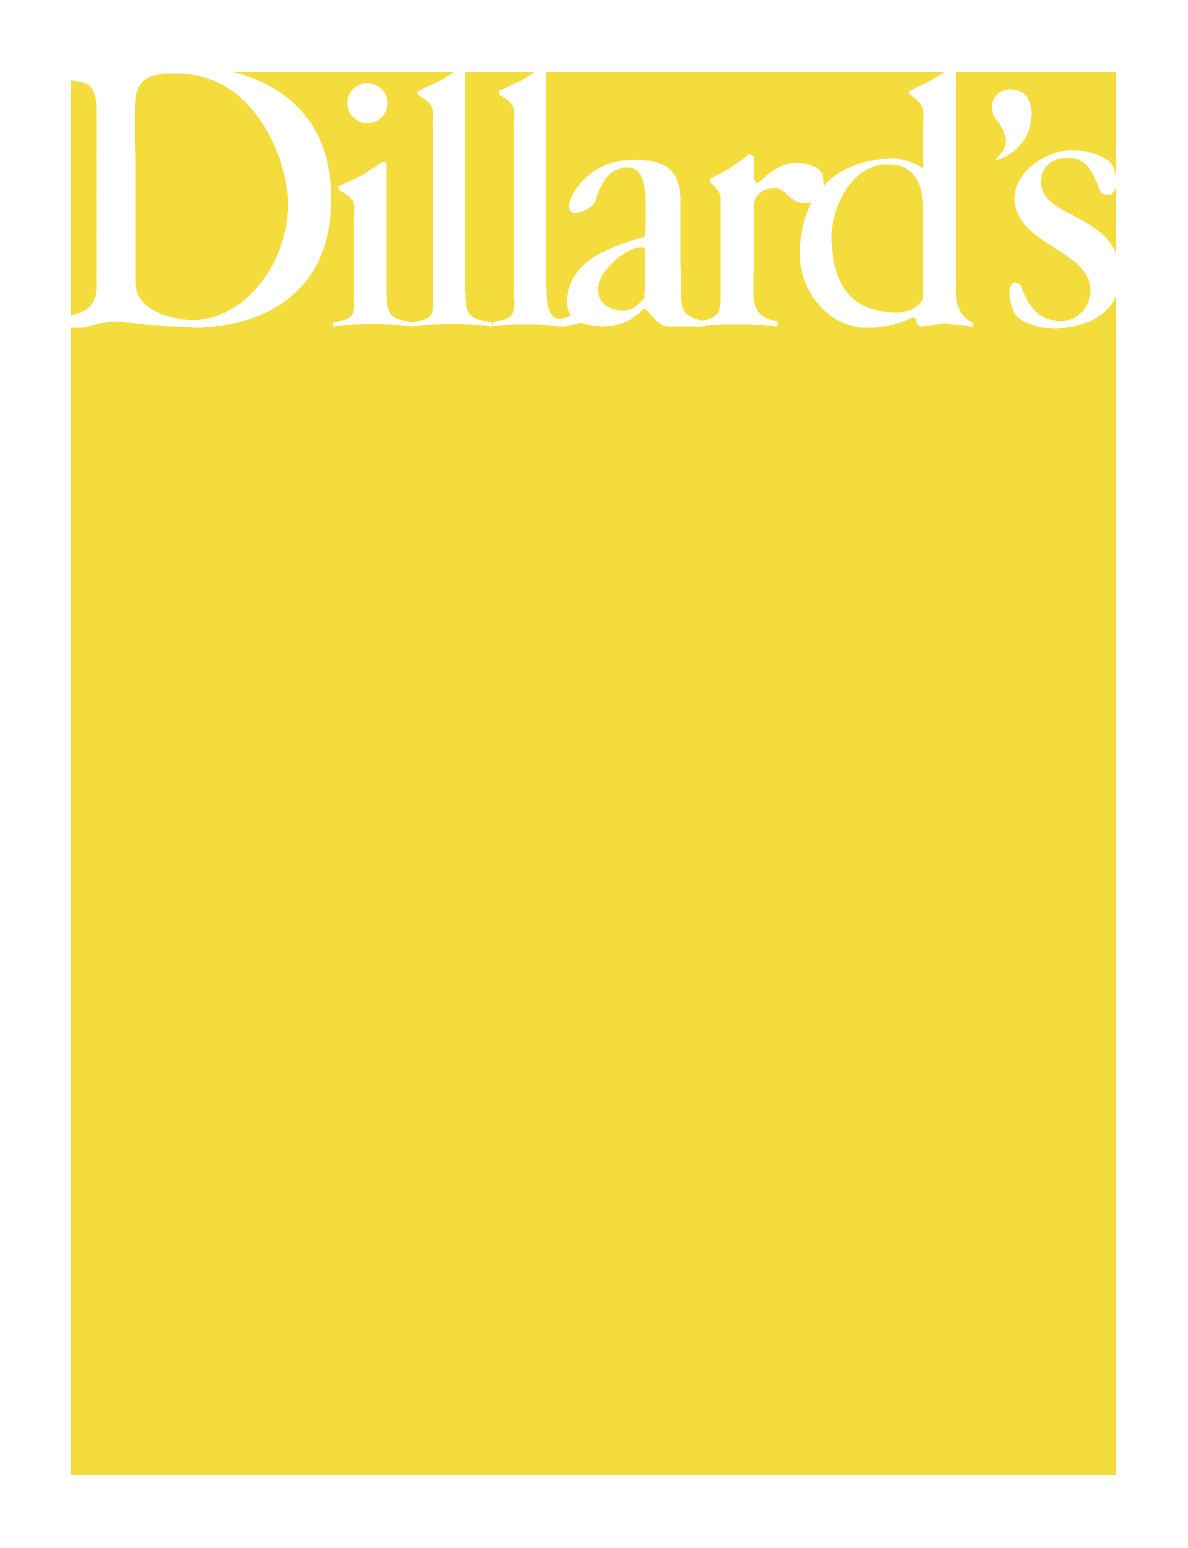 Dillard's 2009 Annual Report Download